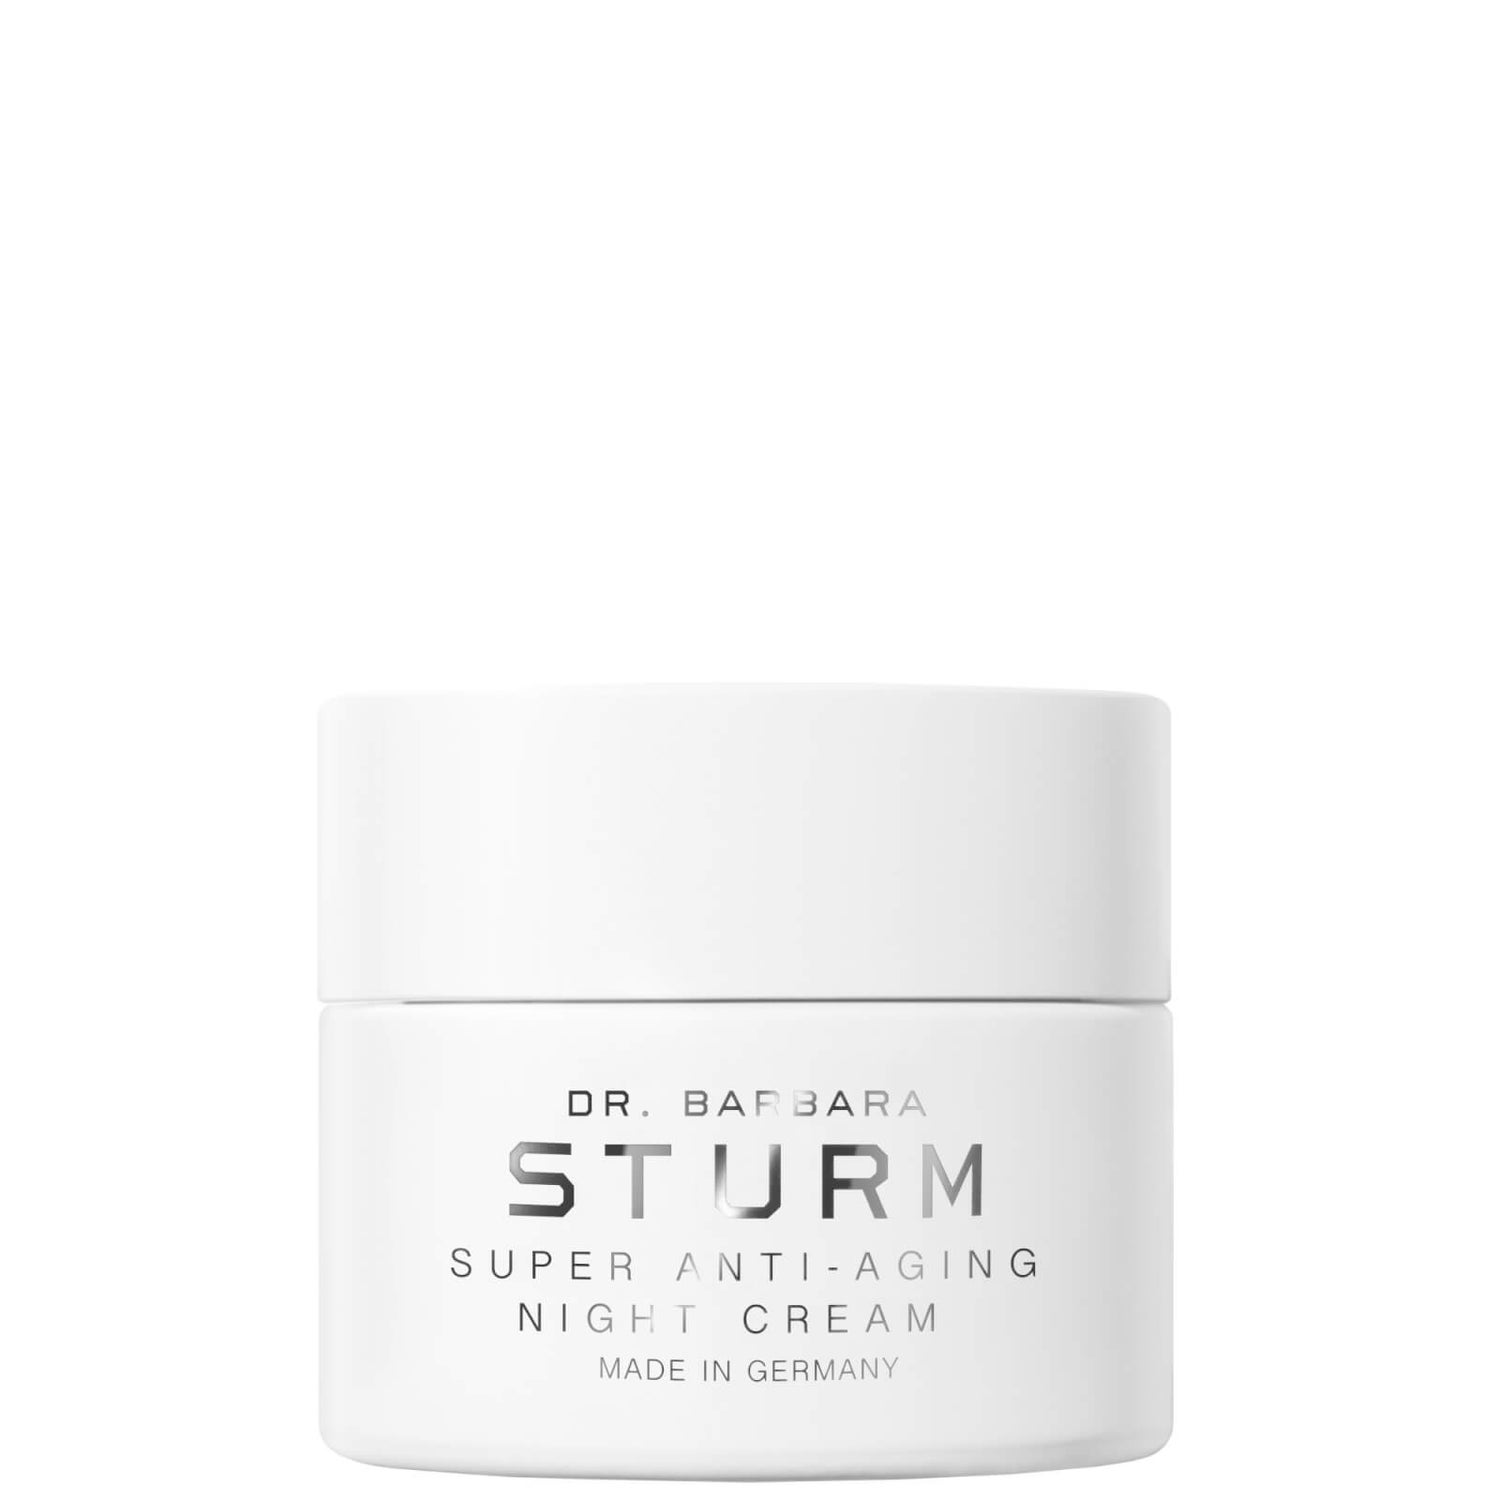 Dr. Barbara Sturm Super Anti-Aging Night Cream 50ml | Cult Beauty